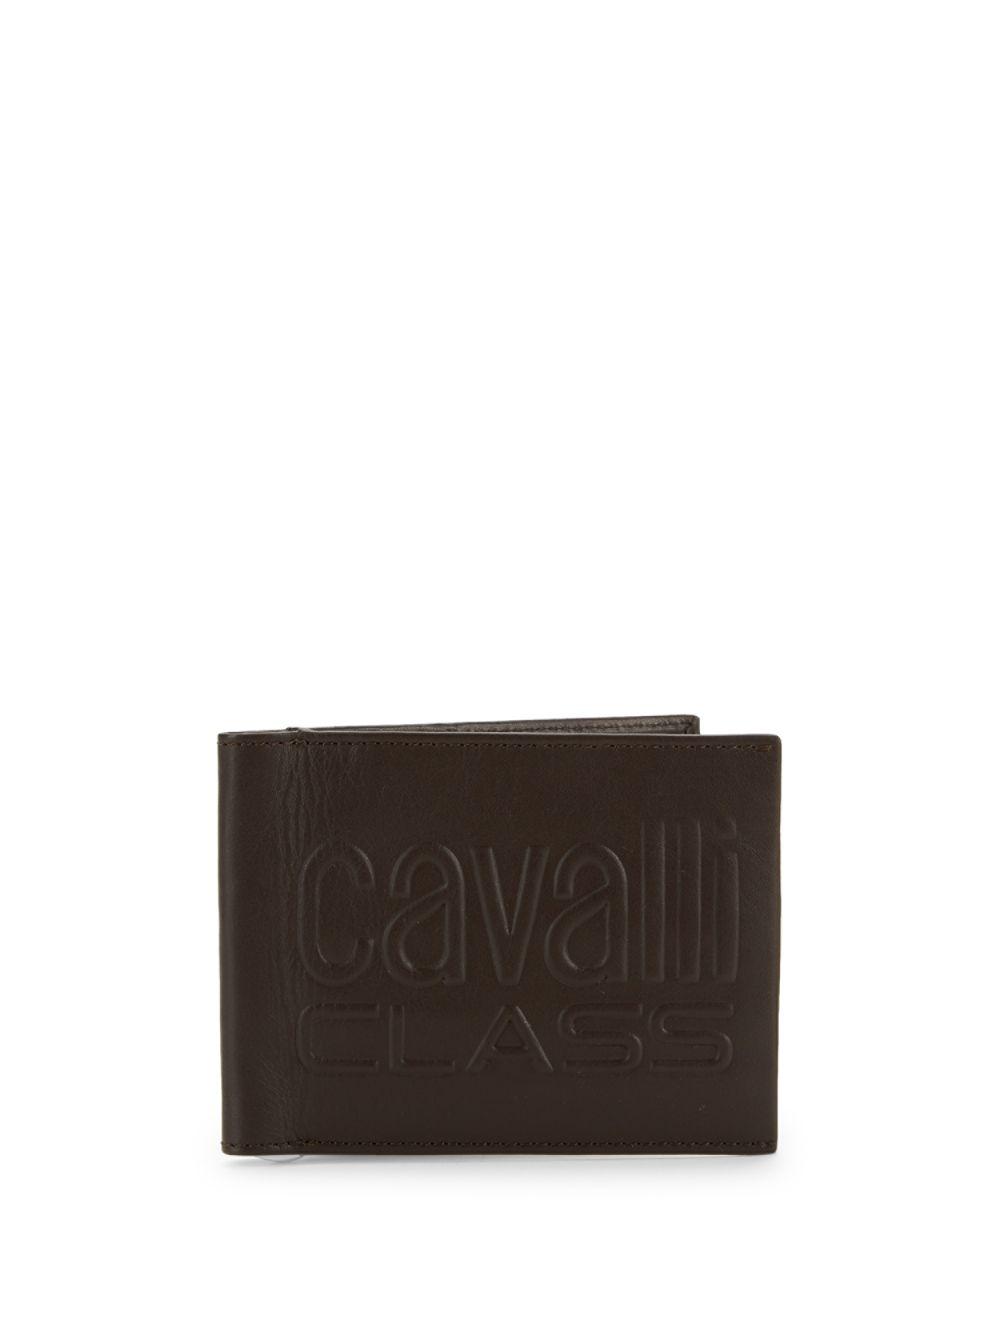 Class Roberto Cavalli Leather Logo Bi-fold Wallet in Brown for Men - Lyst